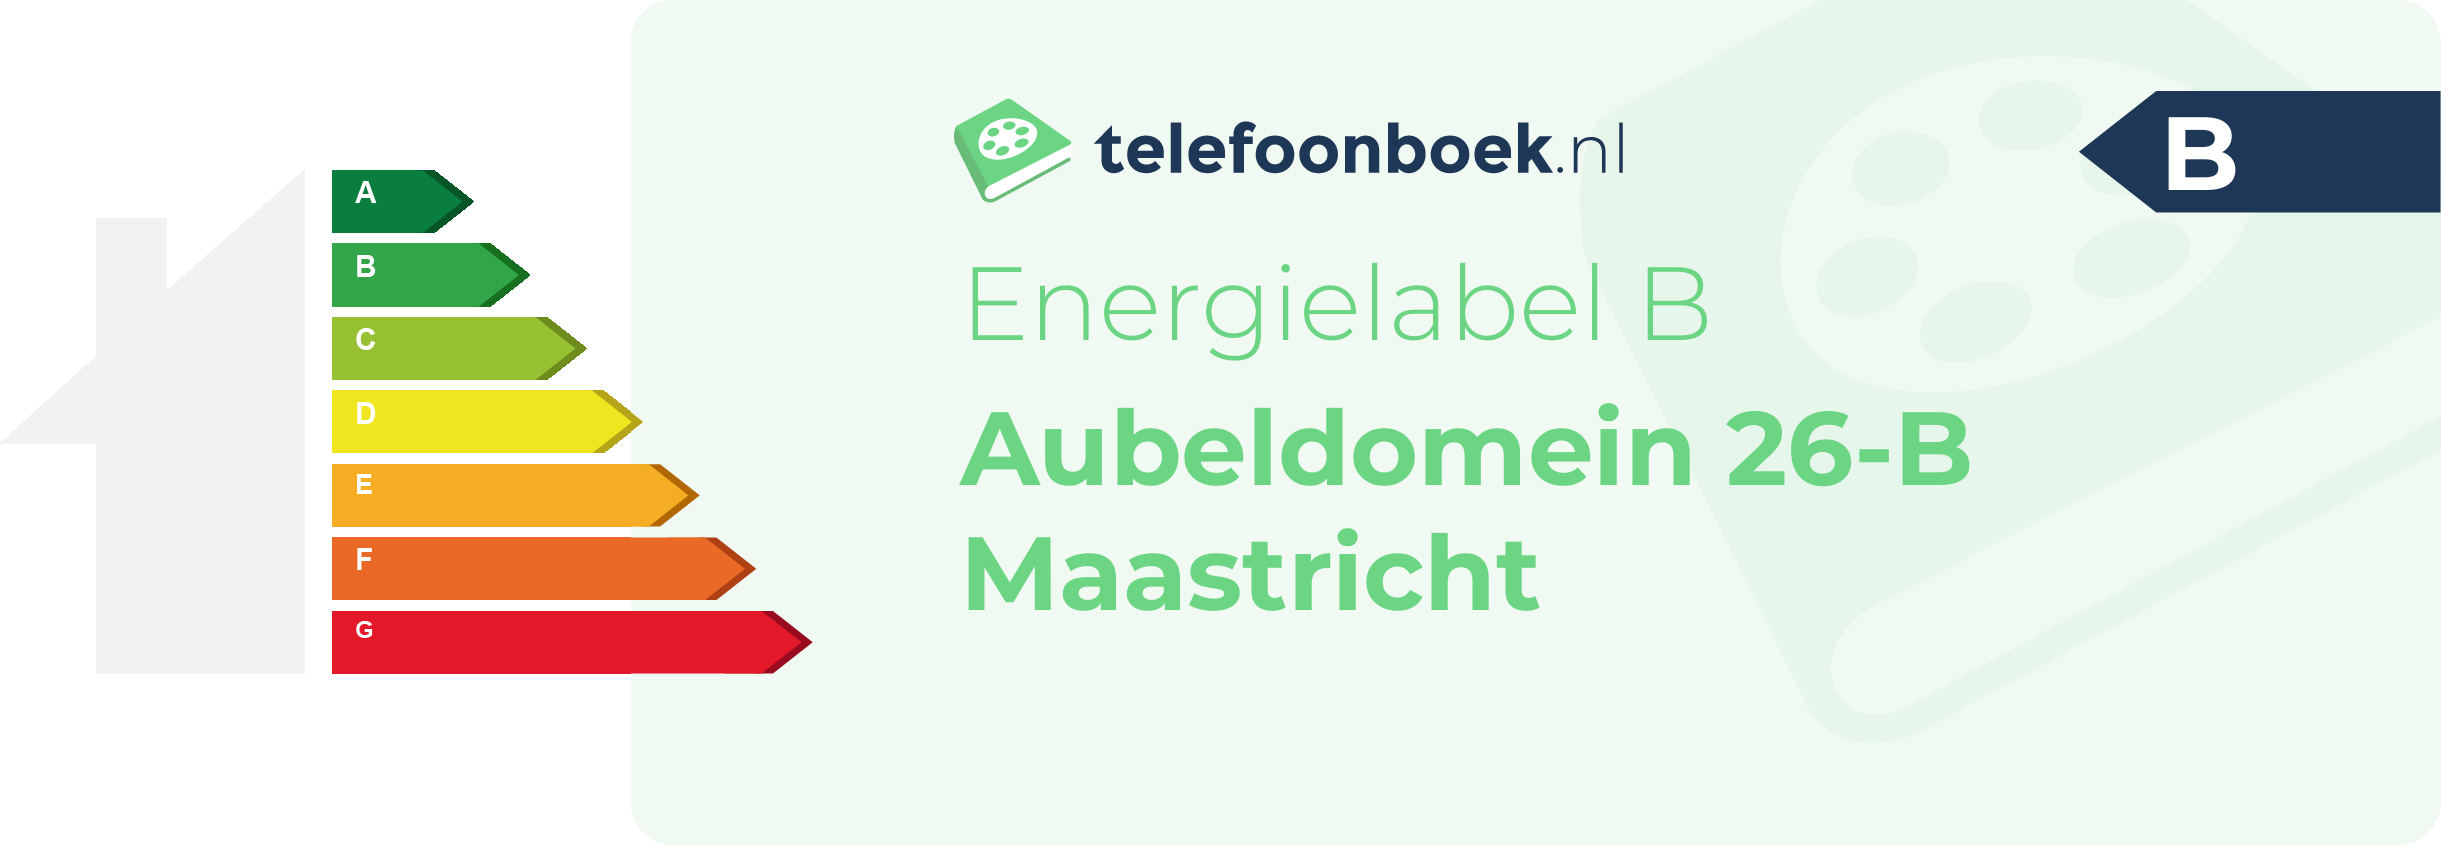 Energielabel Aubeldomein 26-B Maastricht